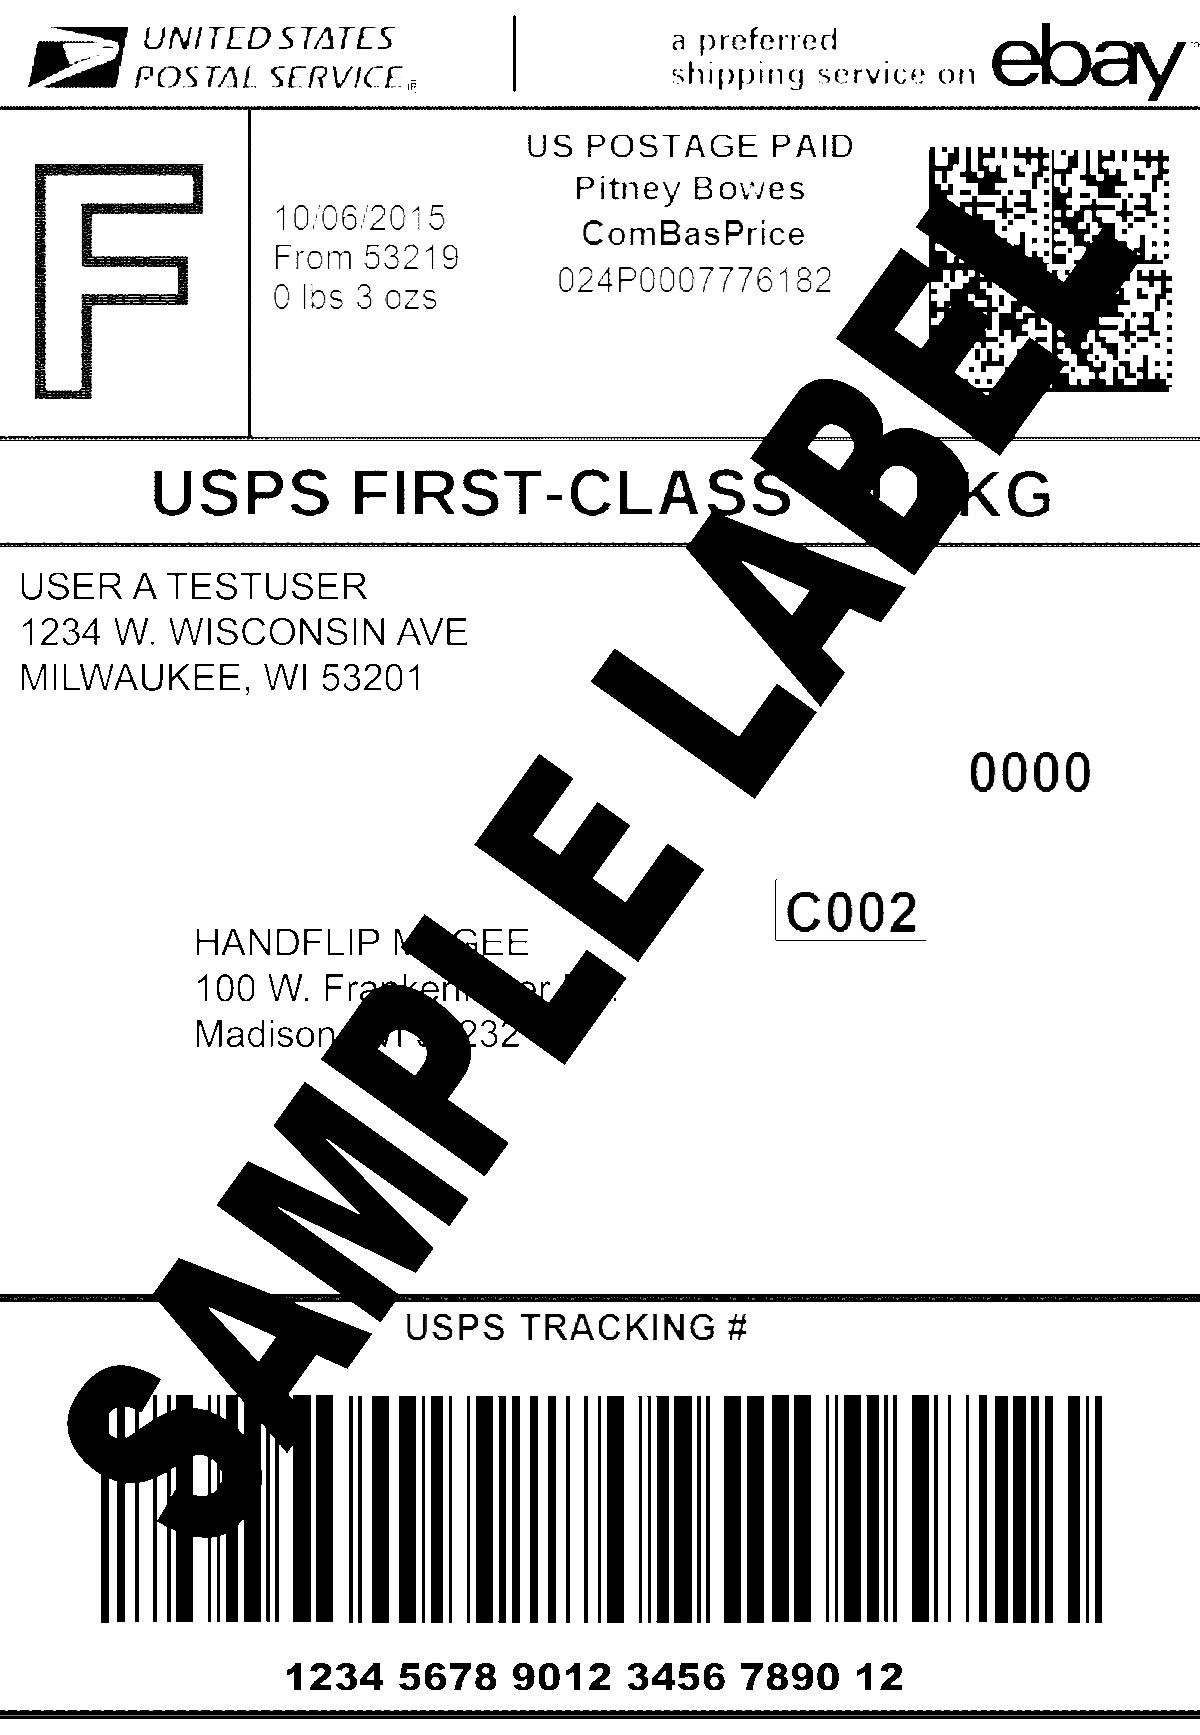 Printable Shipping Label Free